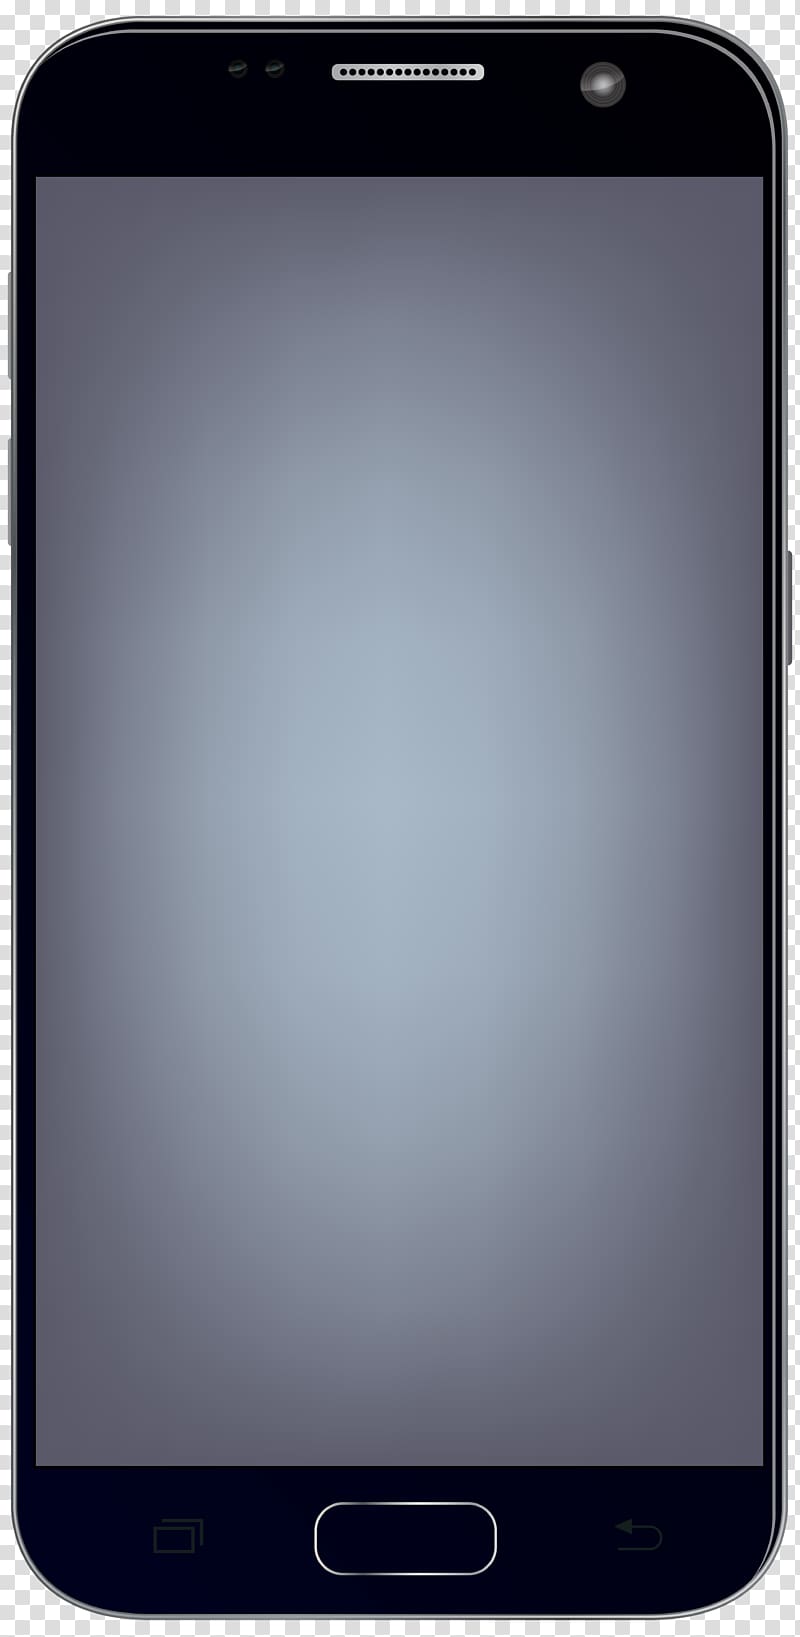 iPhone Google Nexus Samsung Galaxy Smartphone , smart phone transparent background PNG clipart